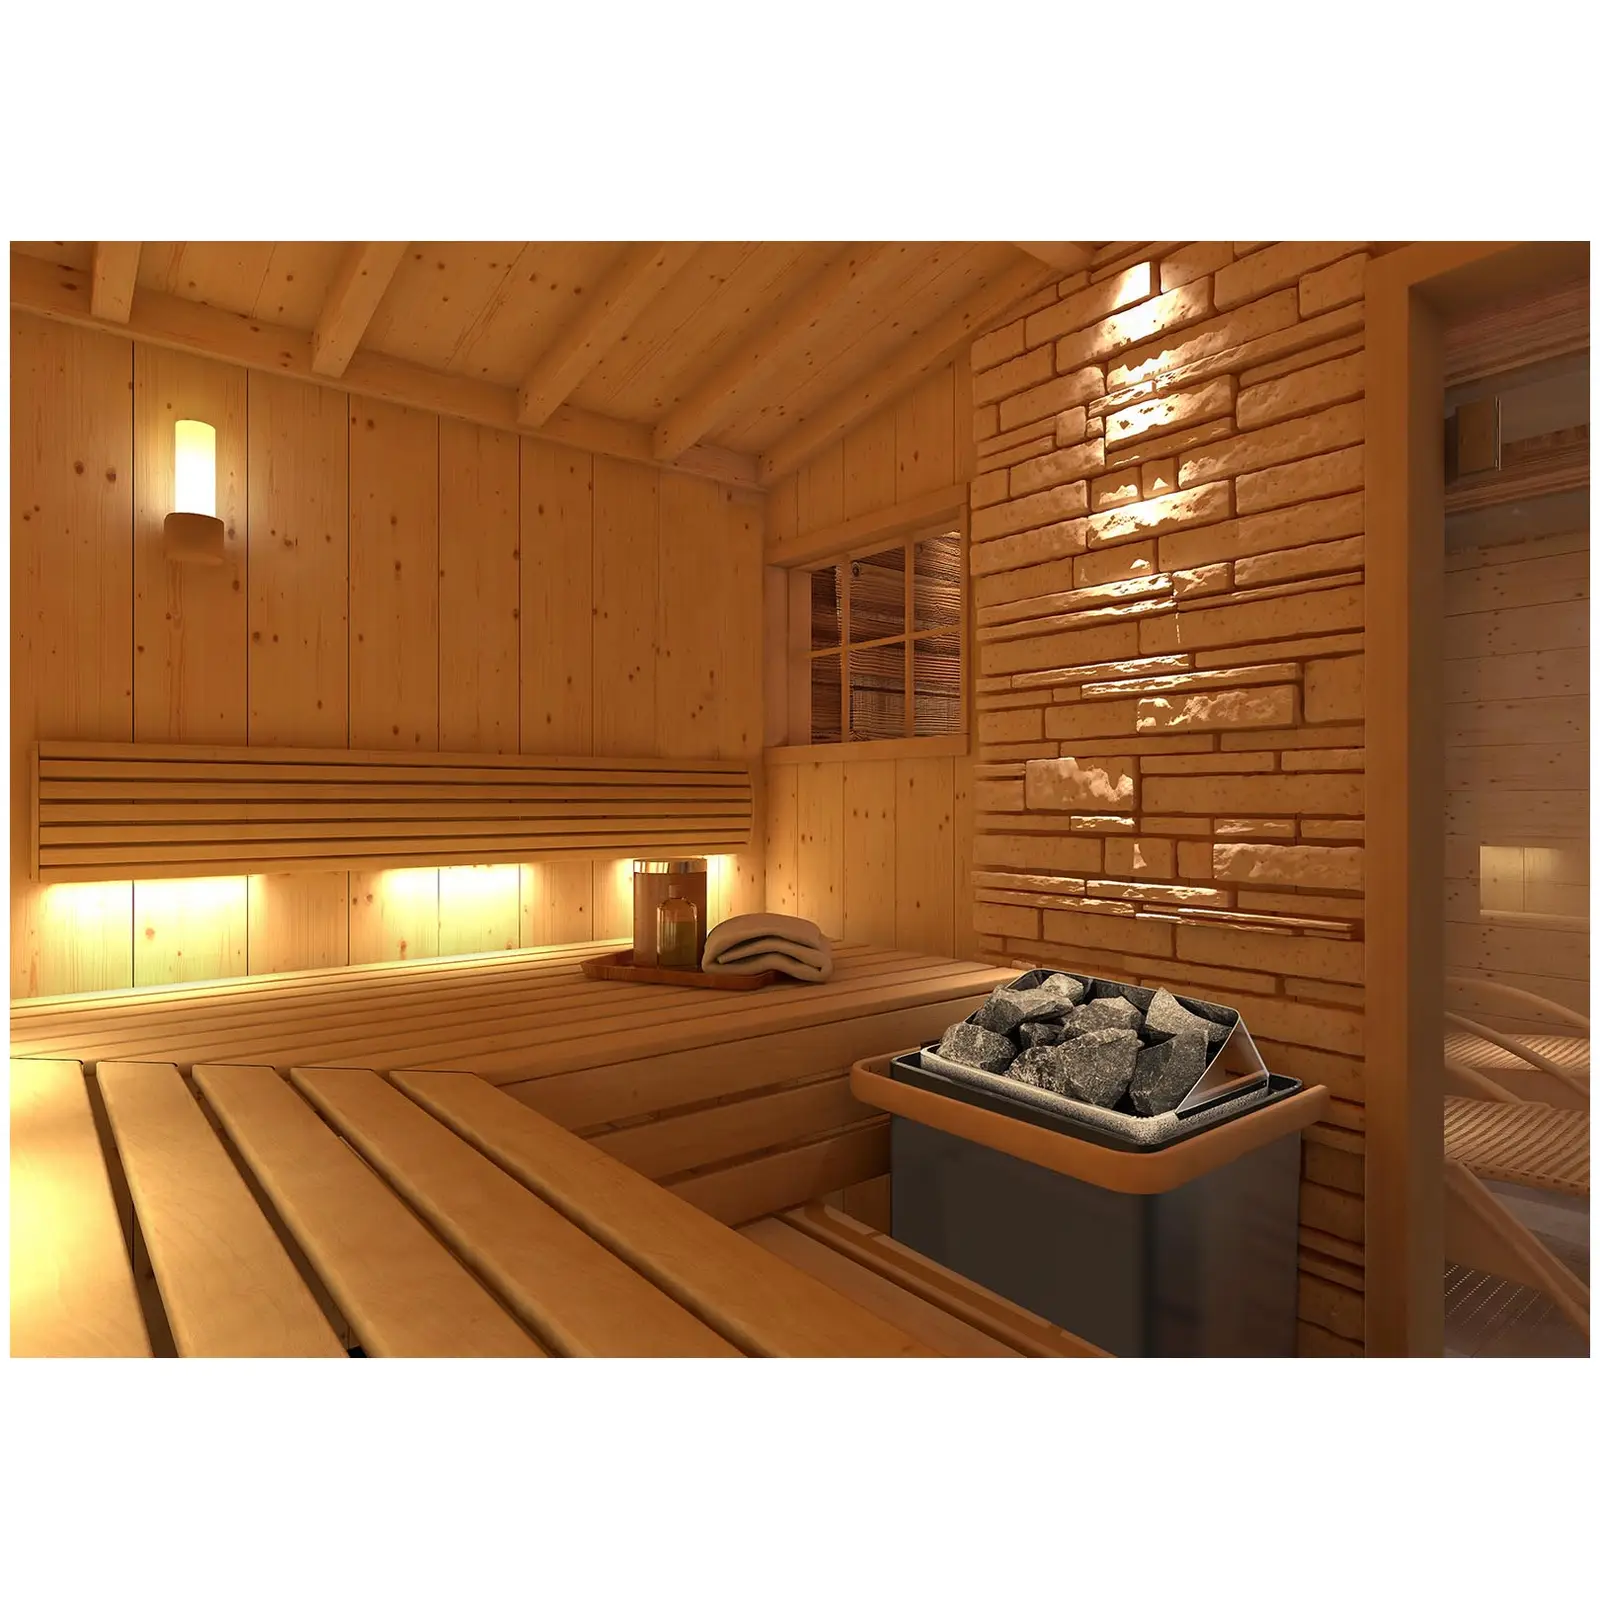 Set Sauna Heater with Sauna Control Panel - 6 kW - 30 to 110 °C